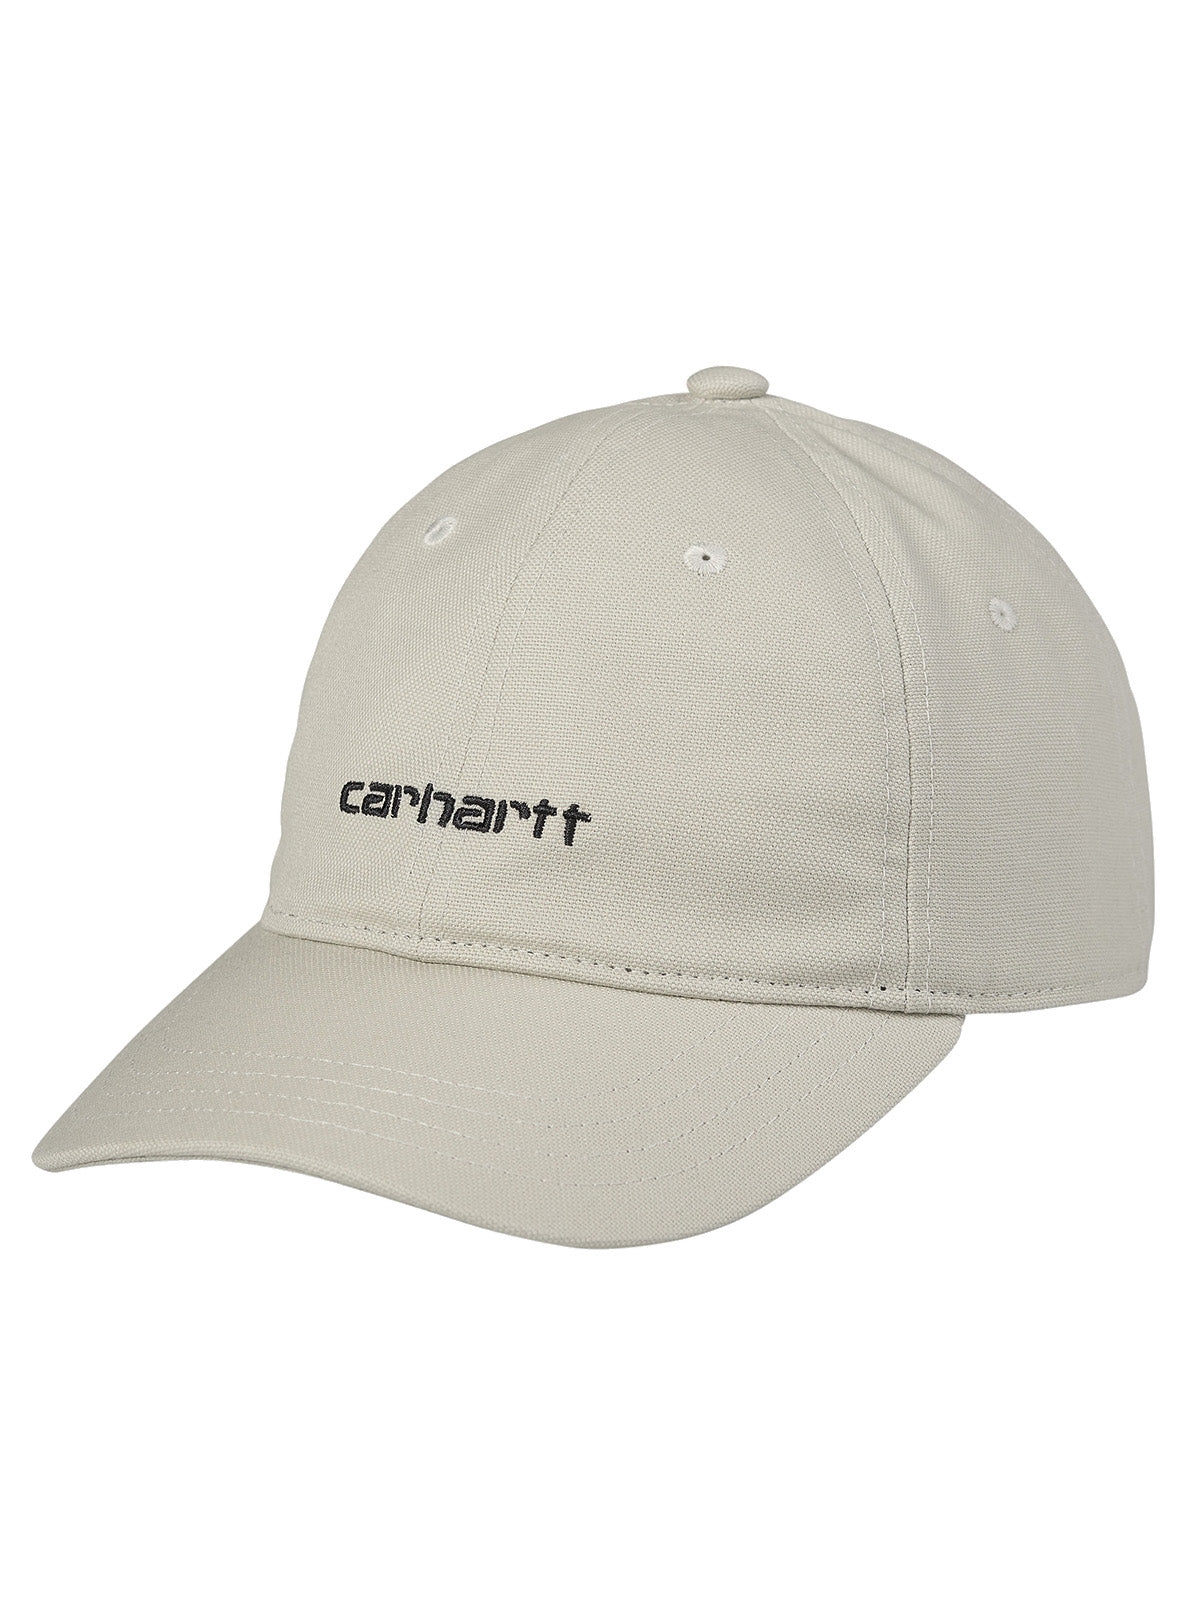 Carhartt Wip Unisex Baseball Caps - Canvas Script Cap - White